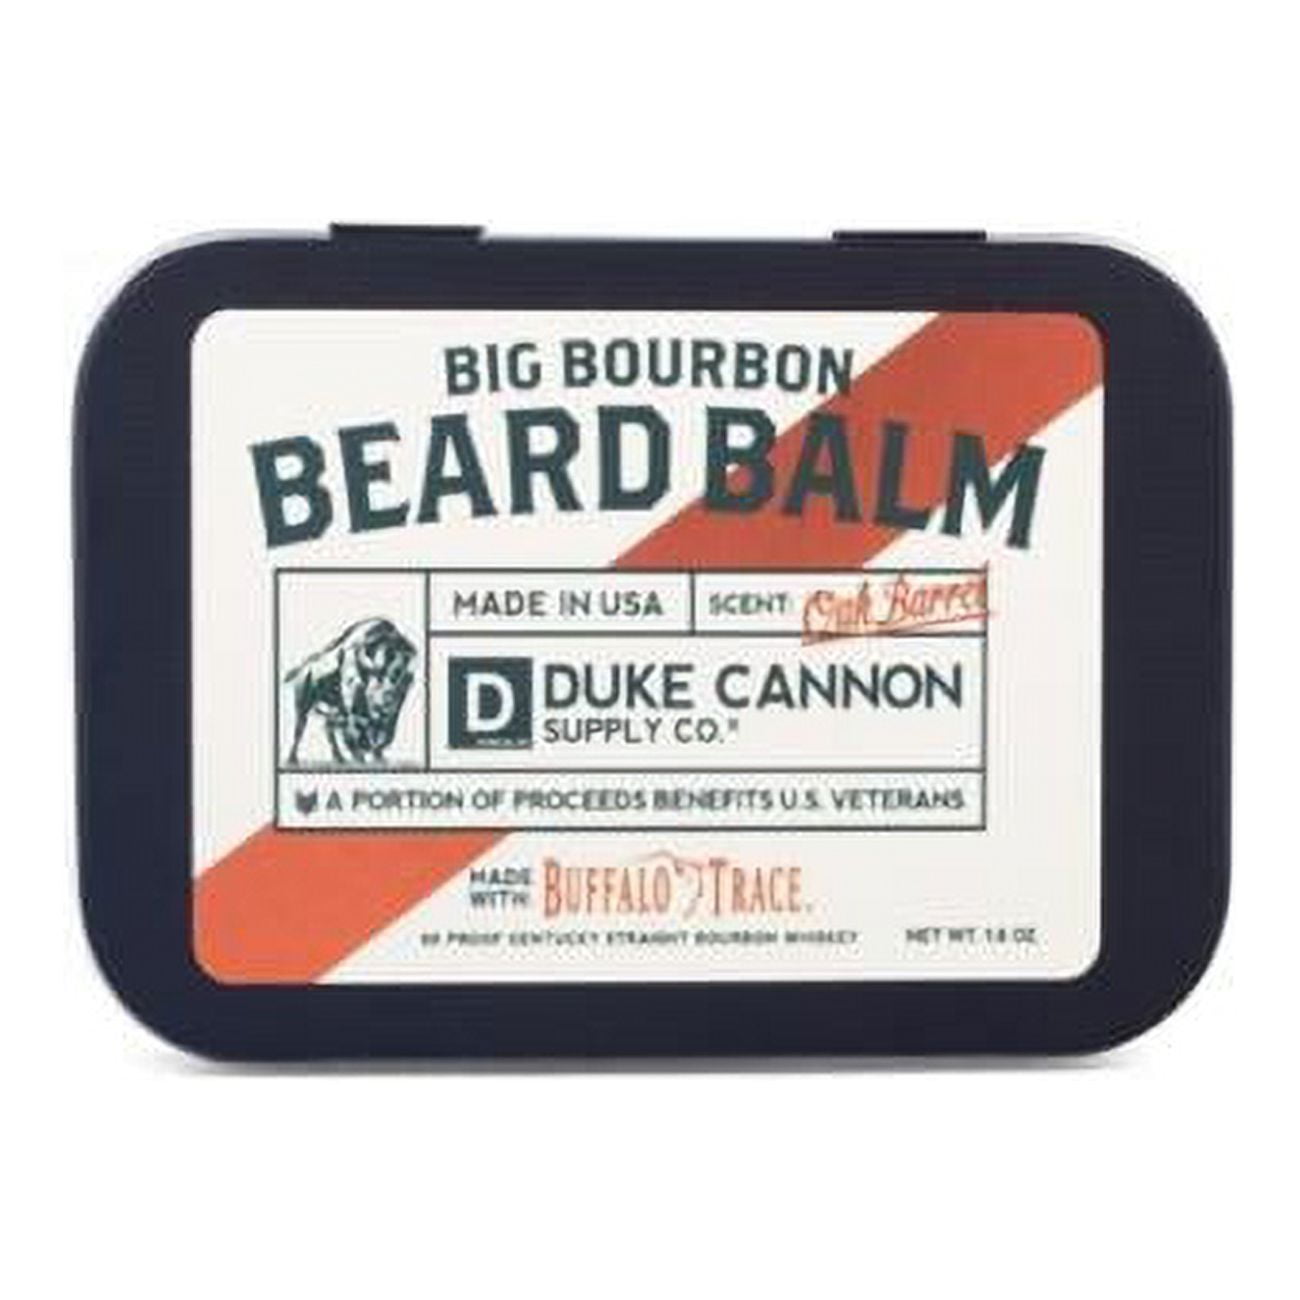 Picture of Duke Cannon 9020833 1.6 oz Oak Barrel Beard Balm, Multi Color